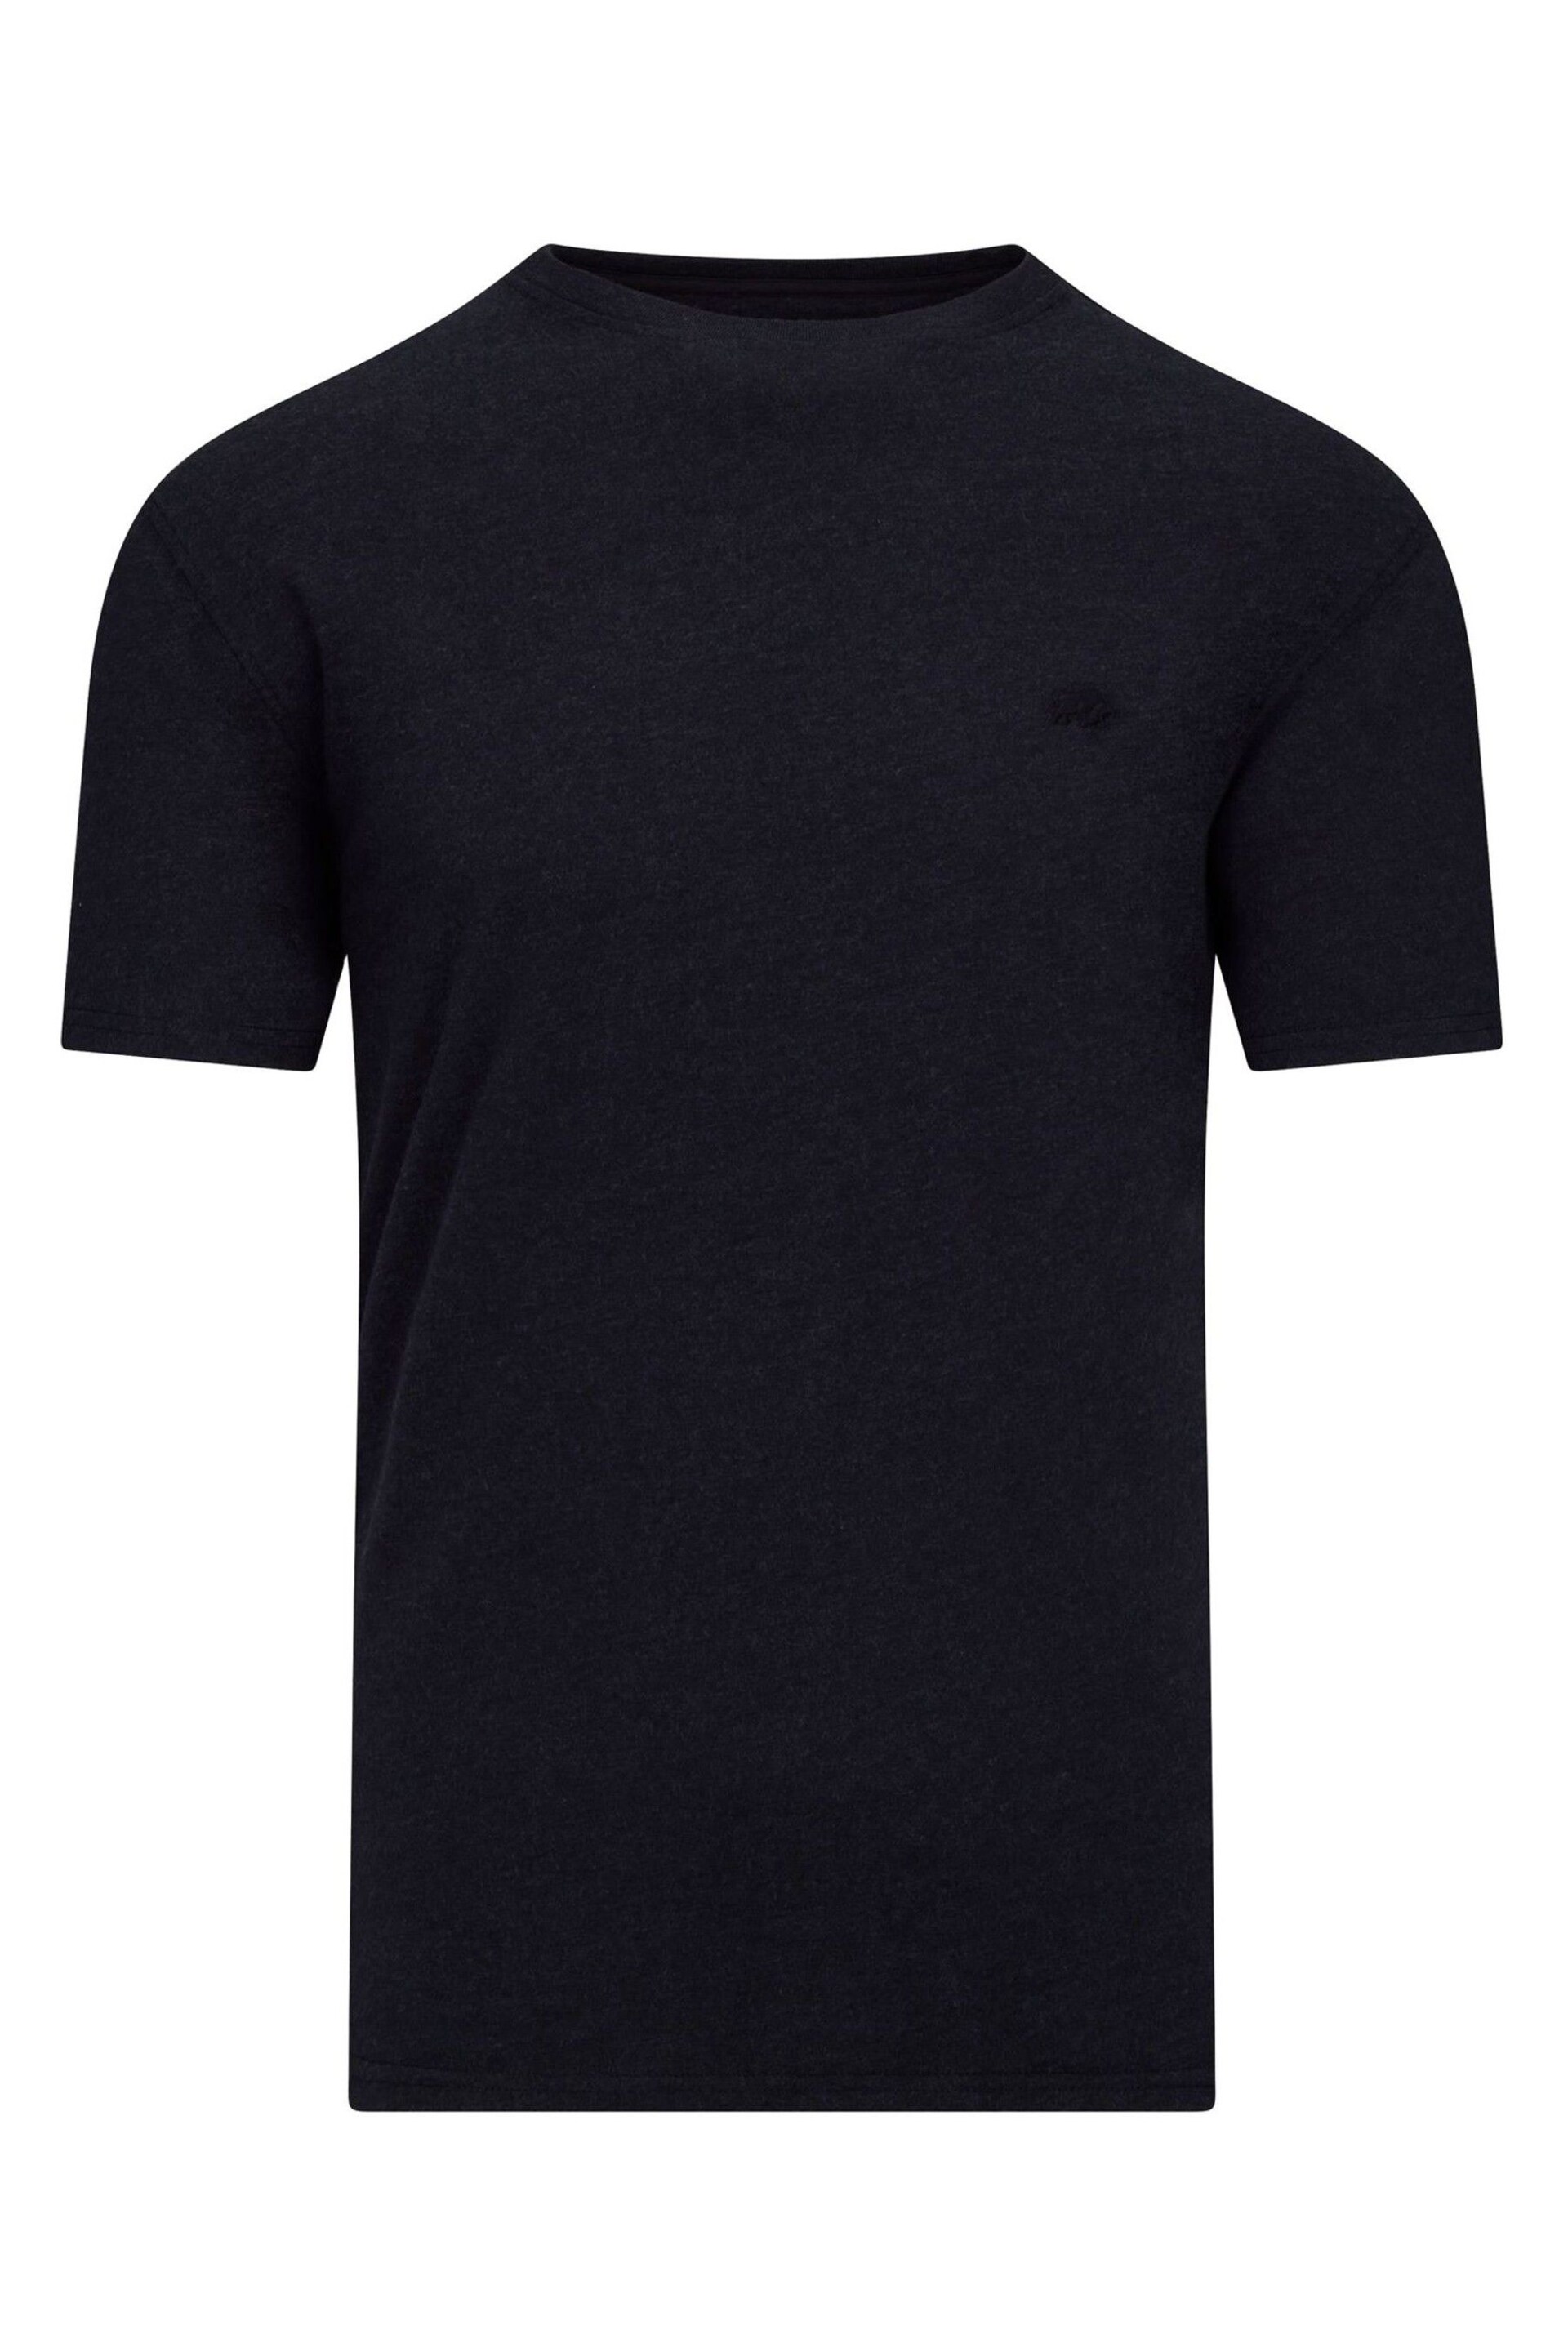 Raging Bull Black/White/Blue Multipack Classic Organic T-Shirt - Image 4 of 7